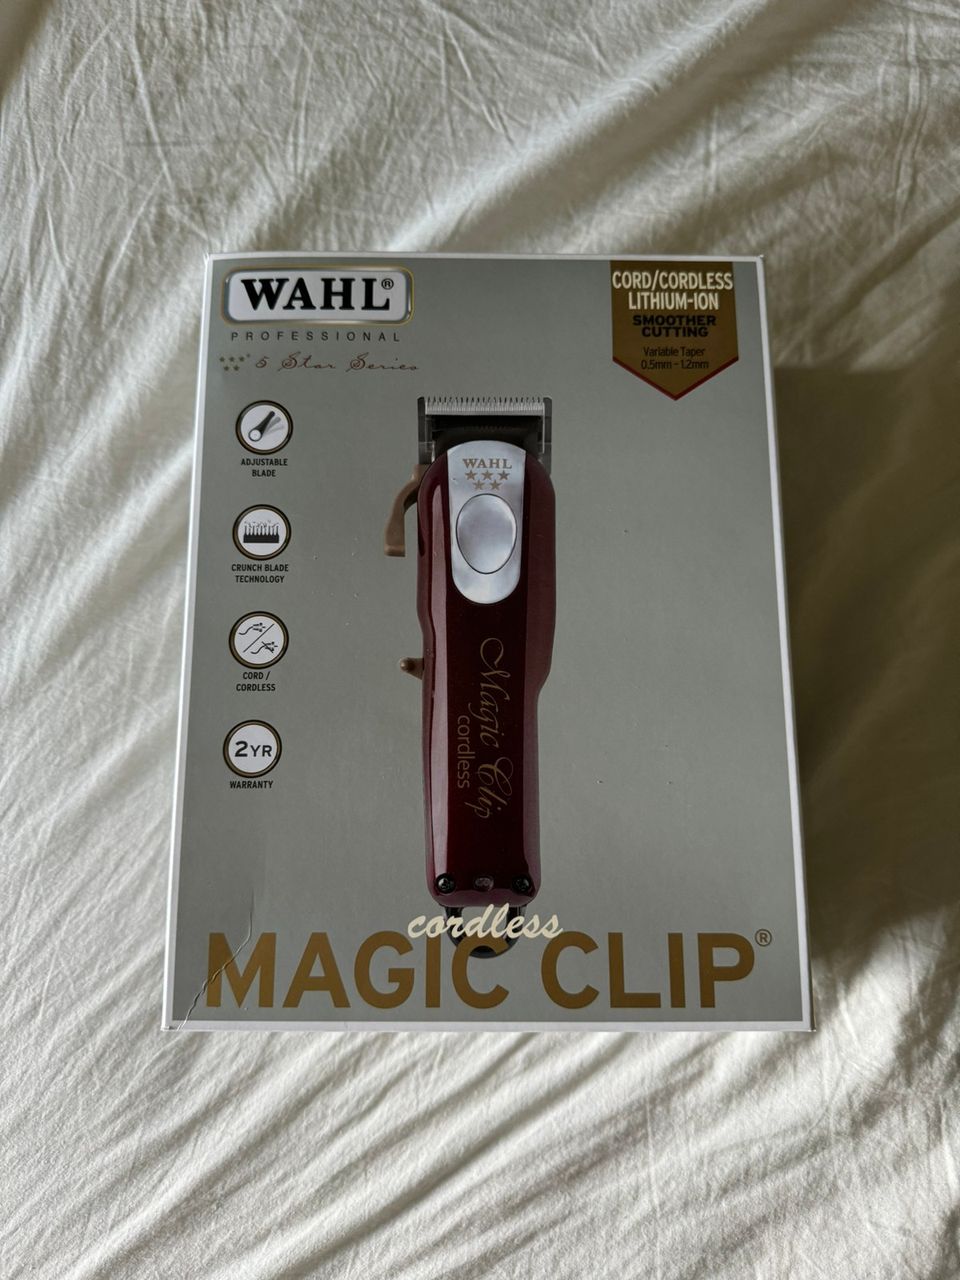 Wahl Cordless Magic Clip